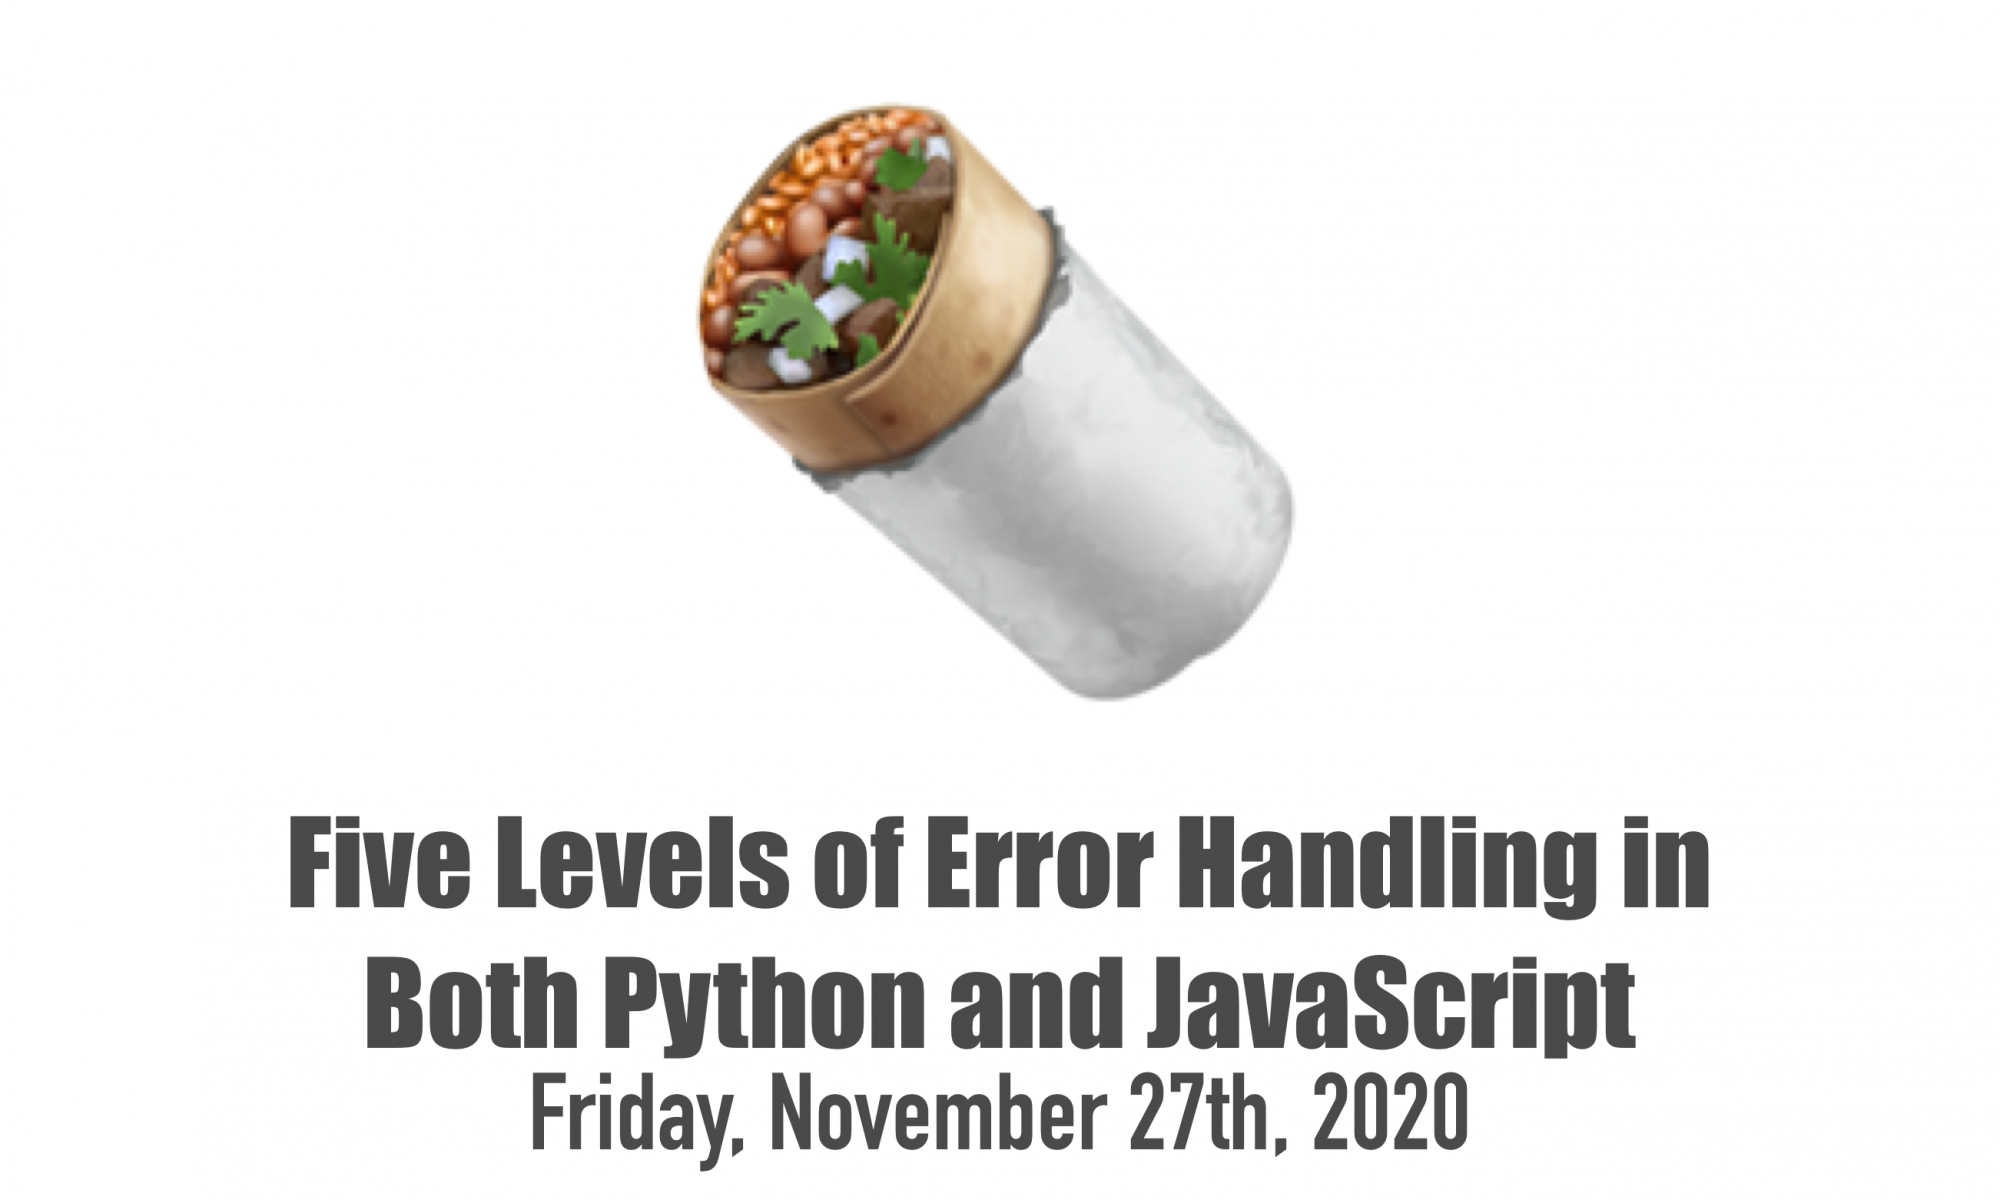 Python Error Handling